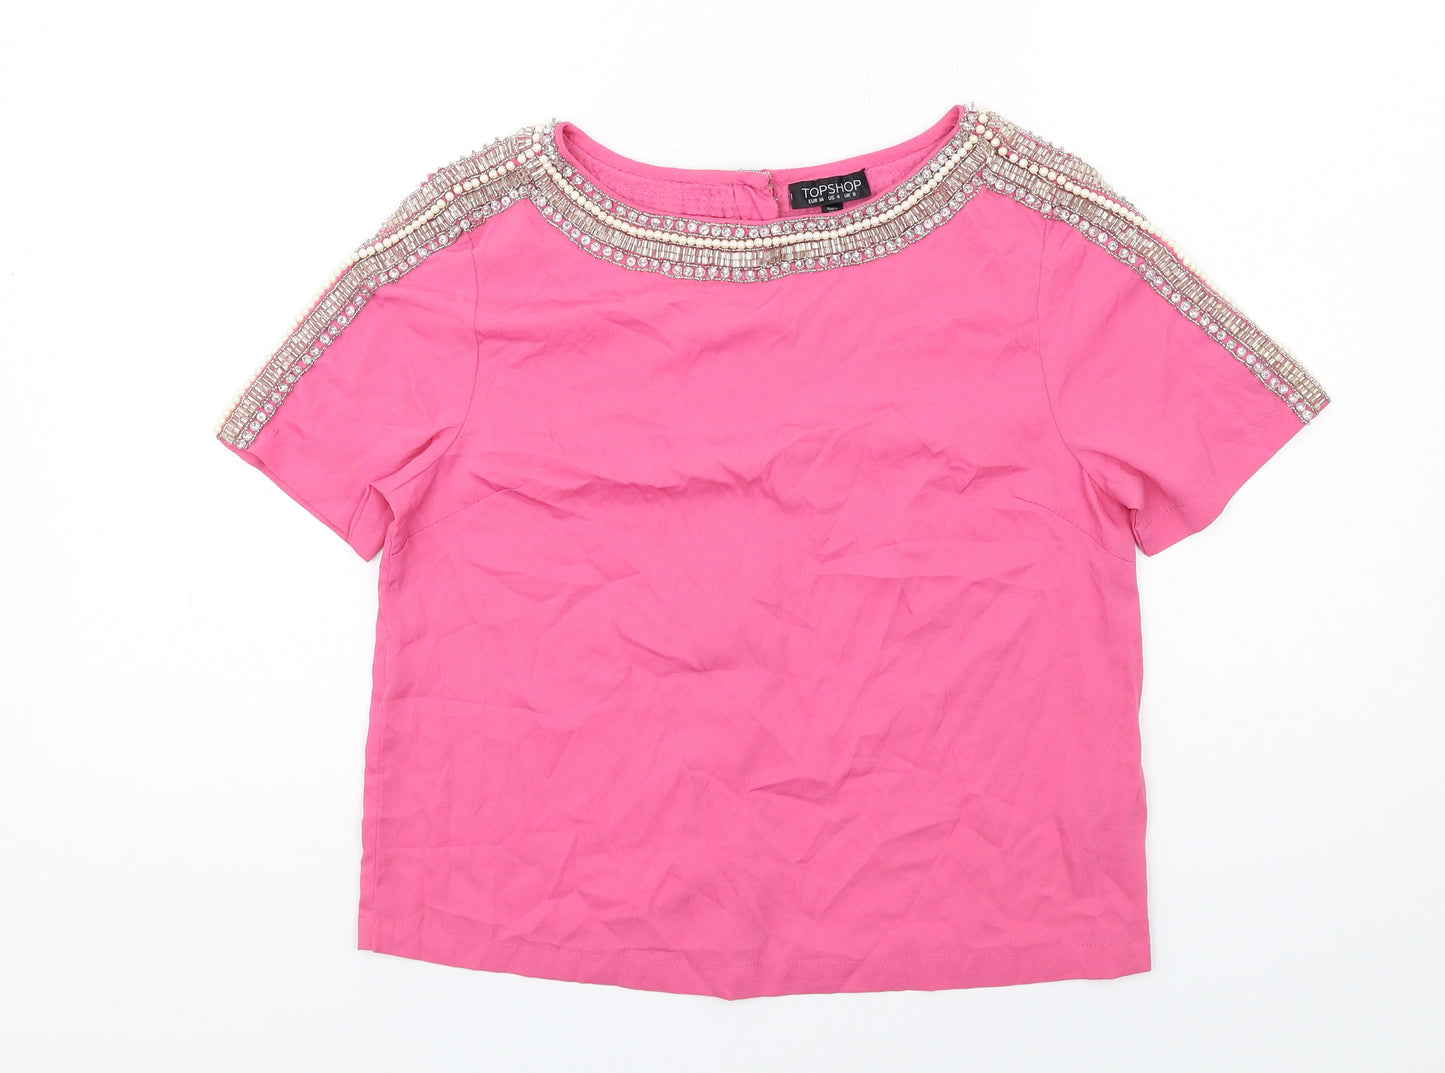 Topshop Womens Pink Polyester Basic Blouse Size 8 Boat Neck - Embellished